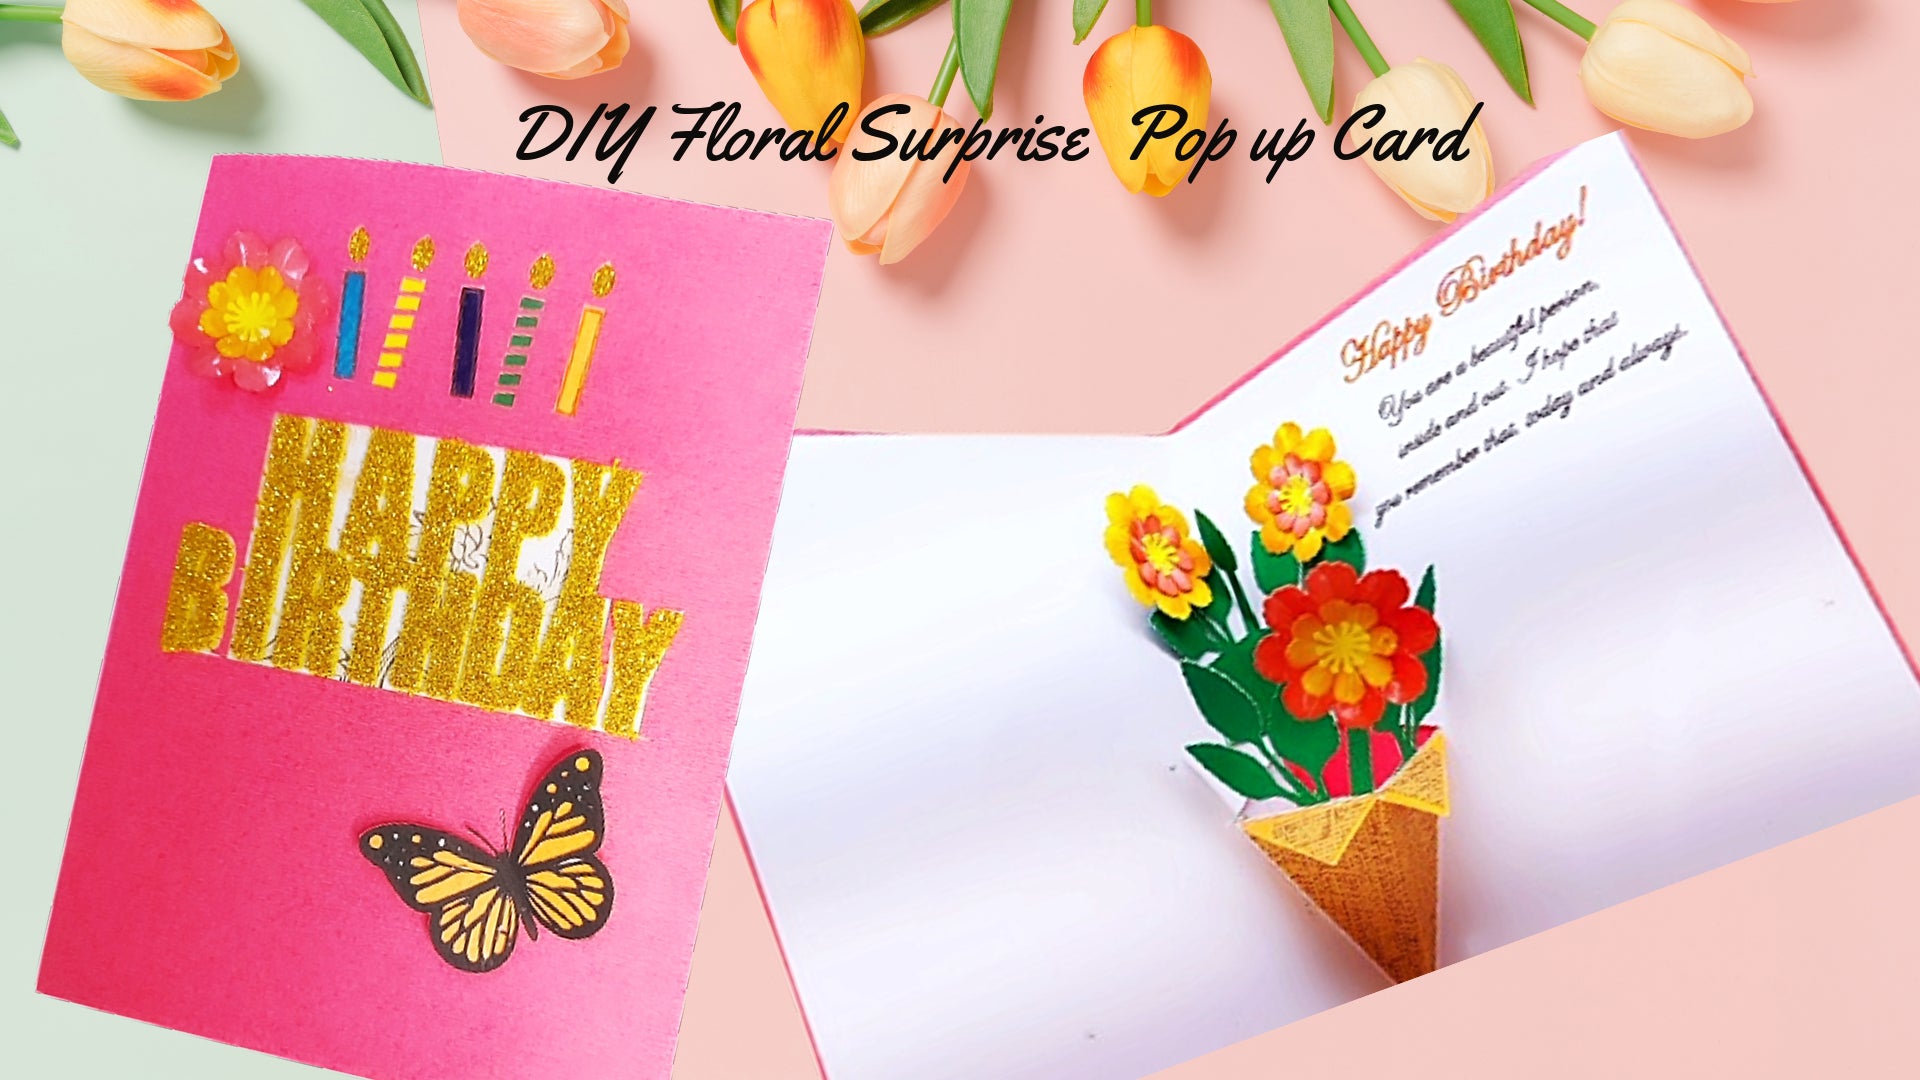 Floral surprise Pop up Card Template (Free) - Ahaeli